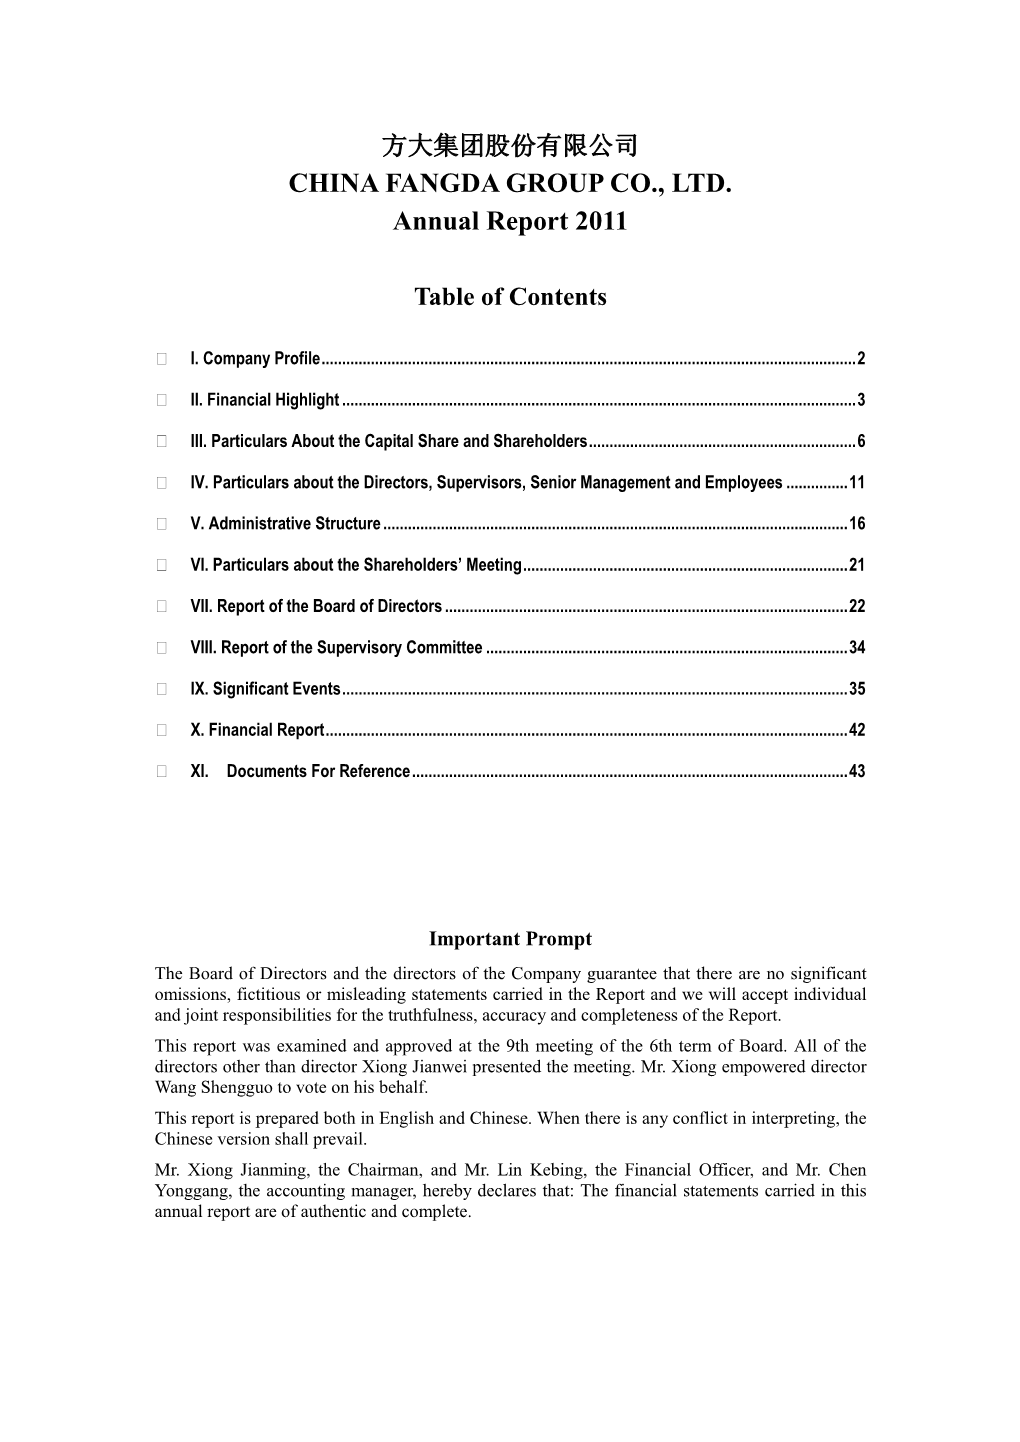 CHINA FANGDA GROUP CO., LTD. Annual Report 2011